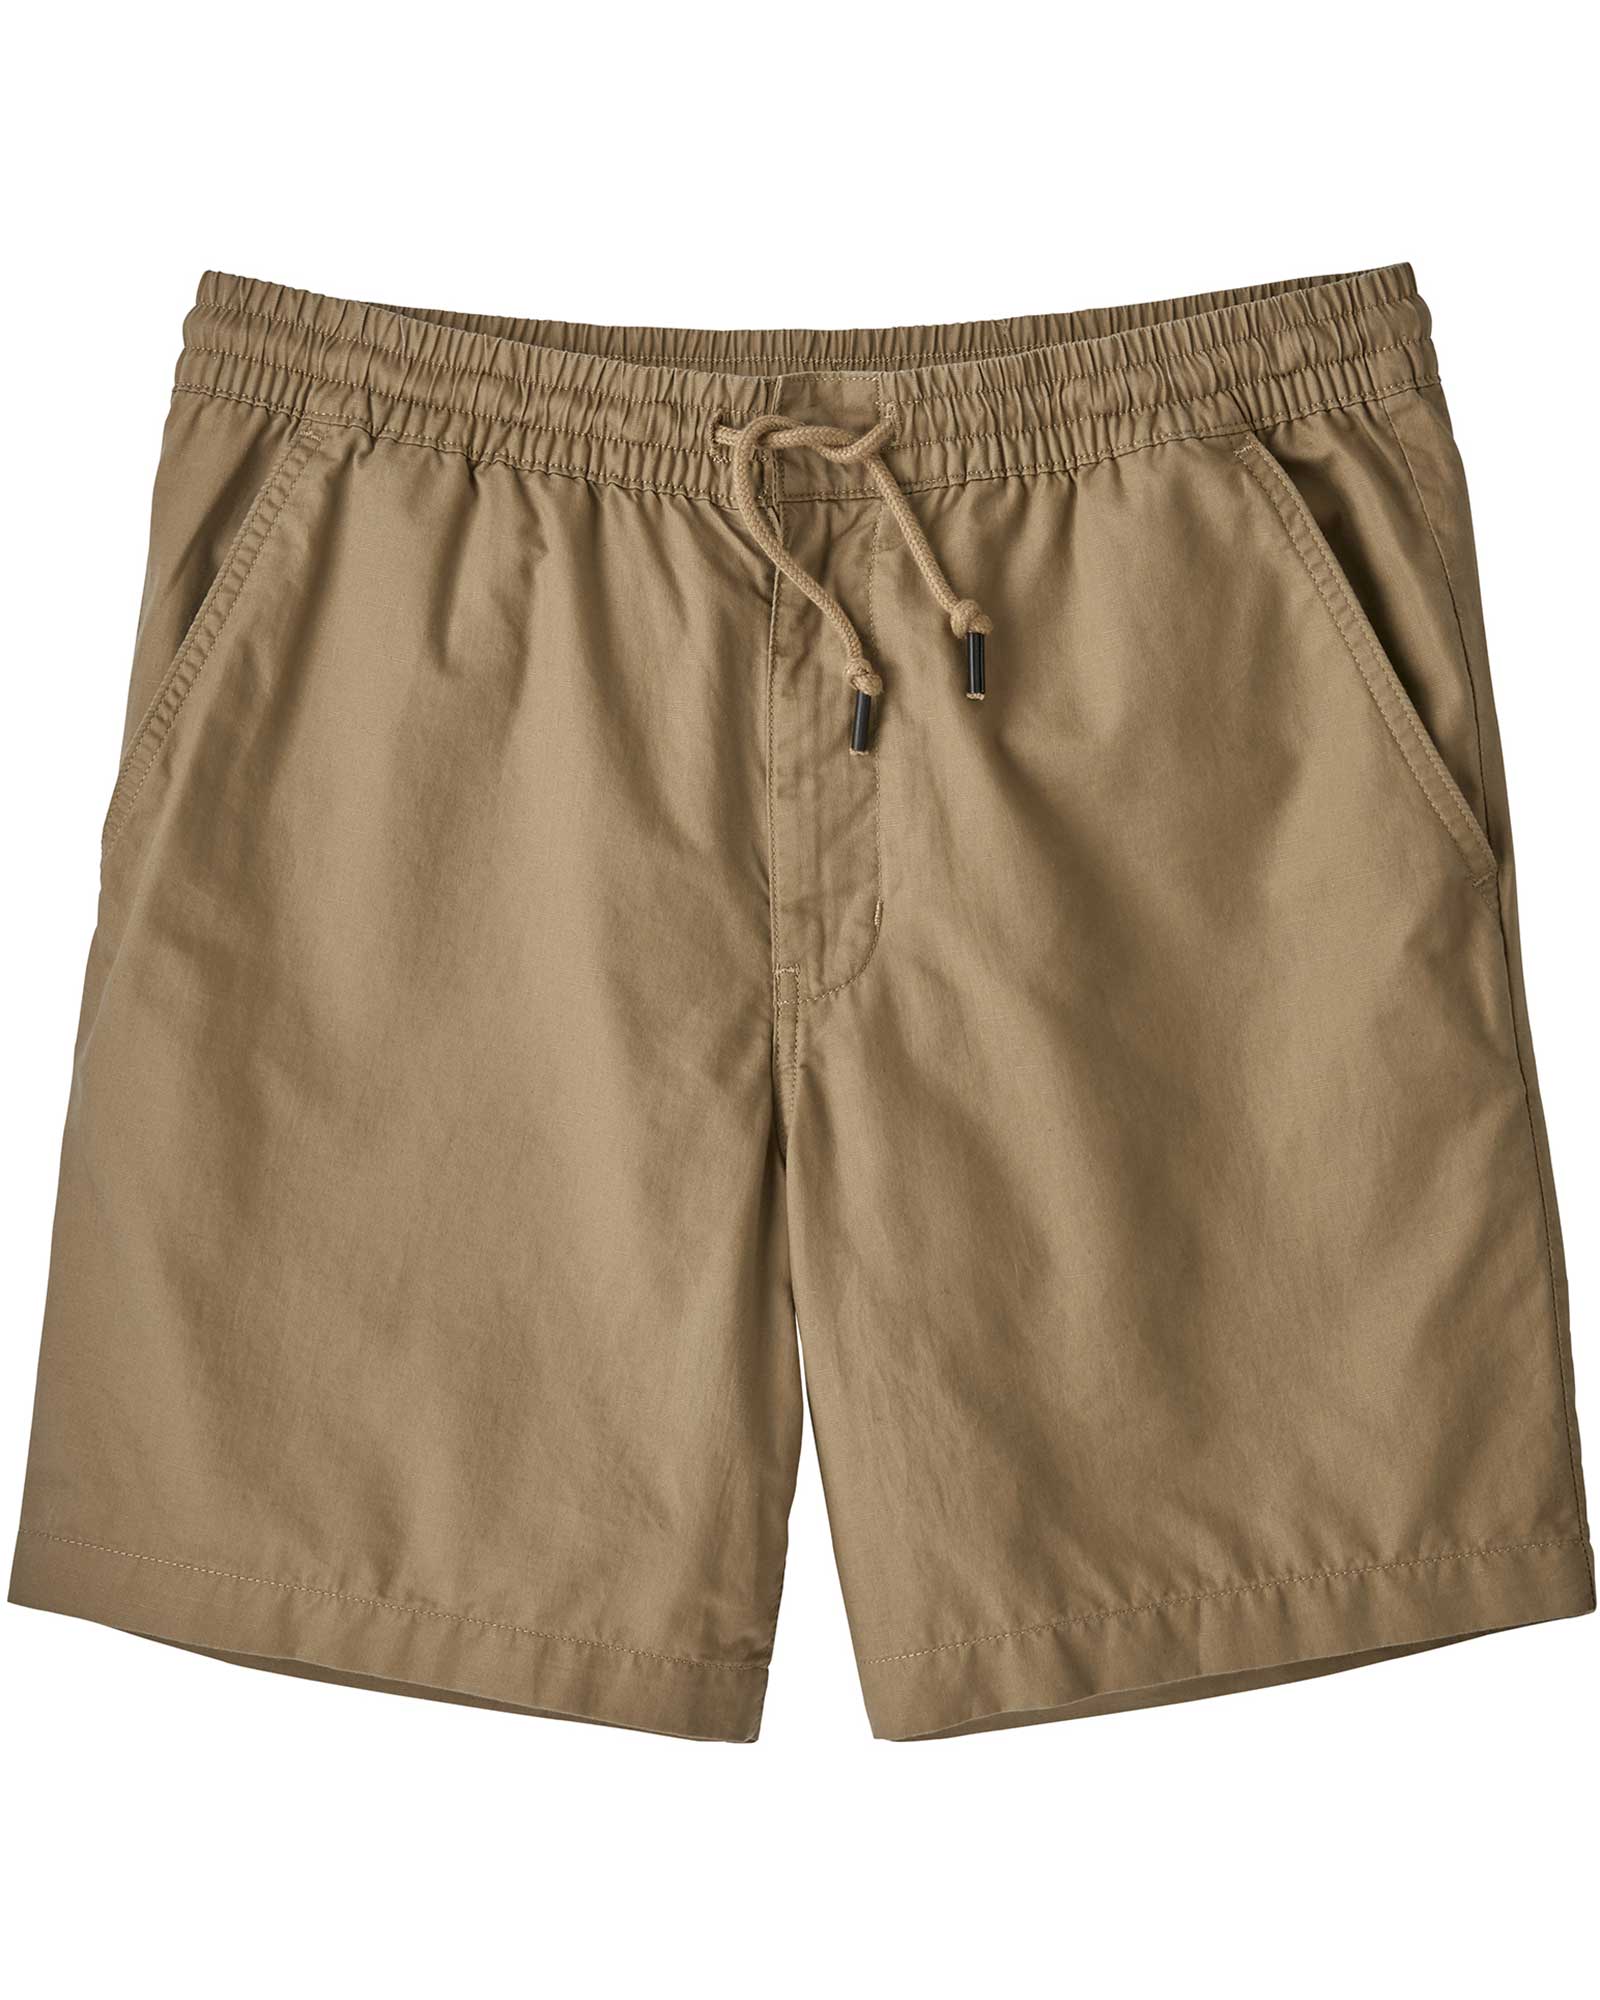 Product image of Patagonia Hemp All Wear Hemp Volley Men's Shorts